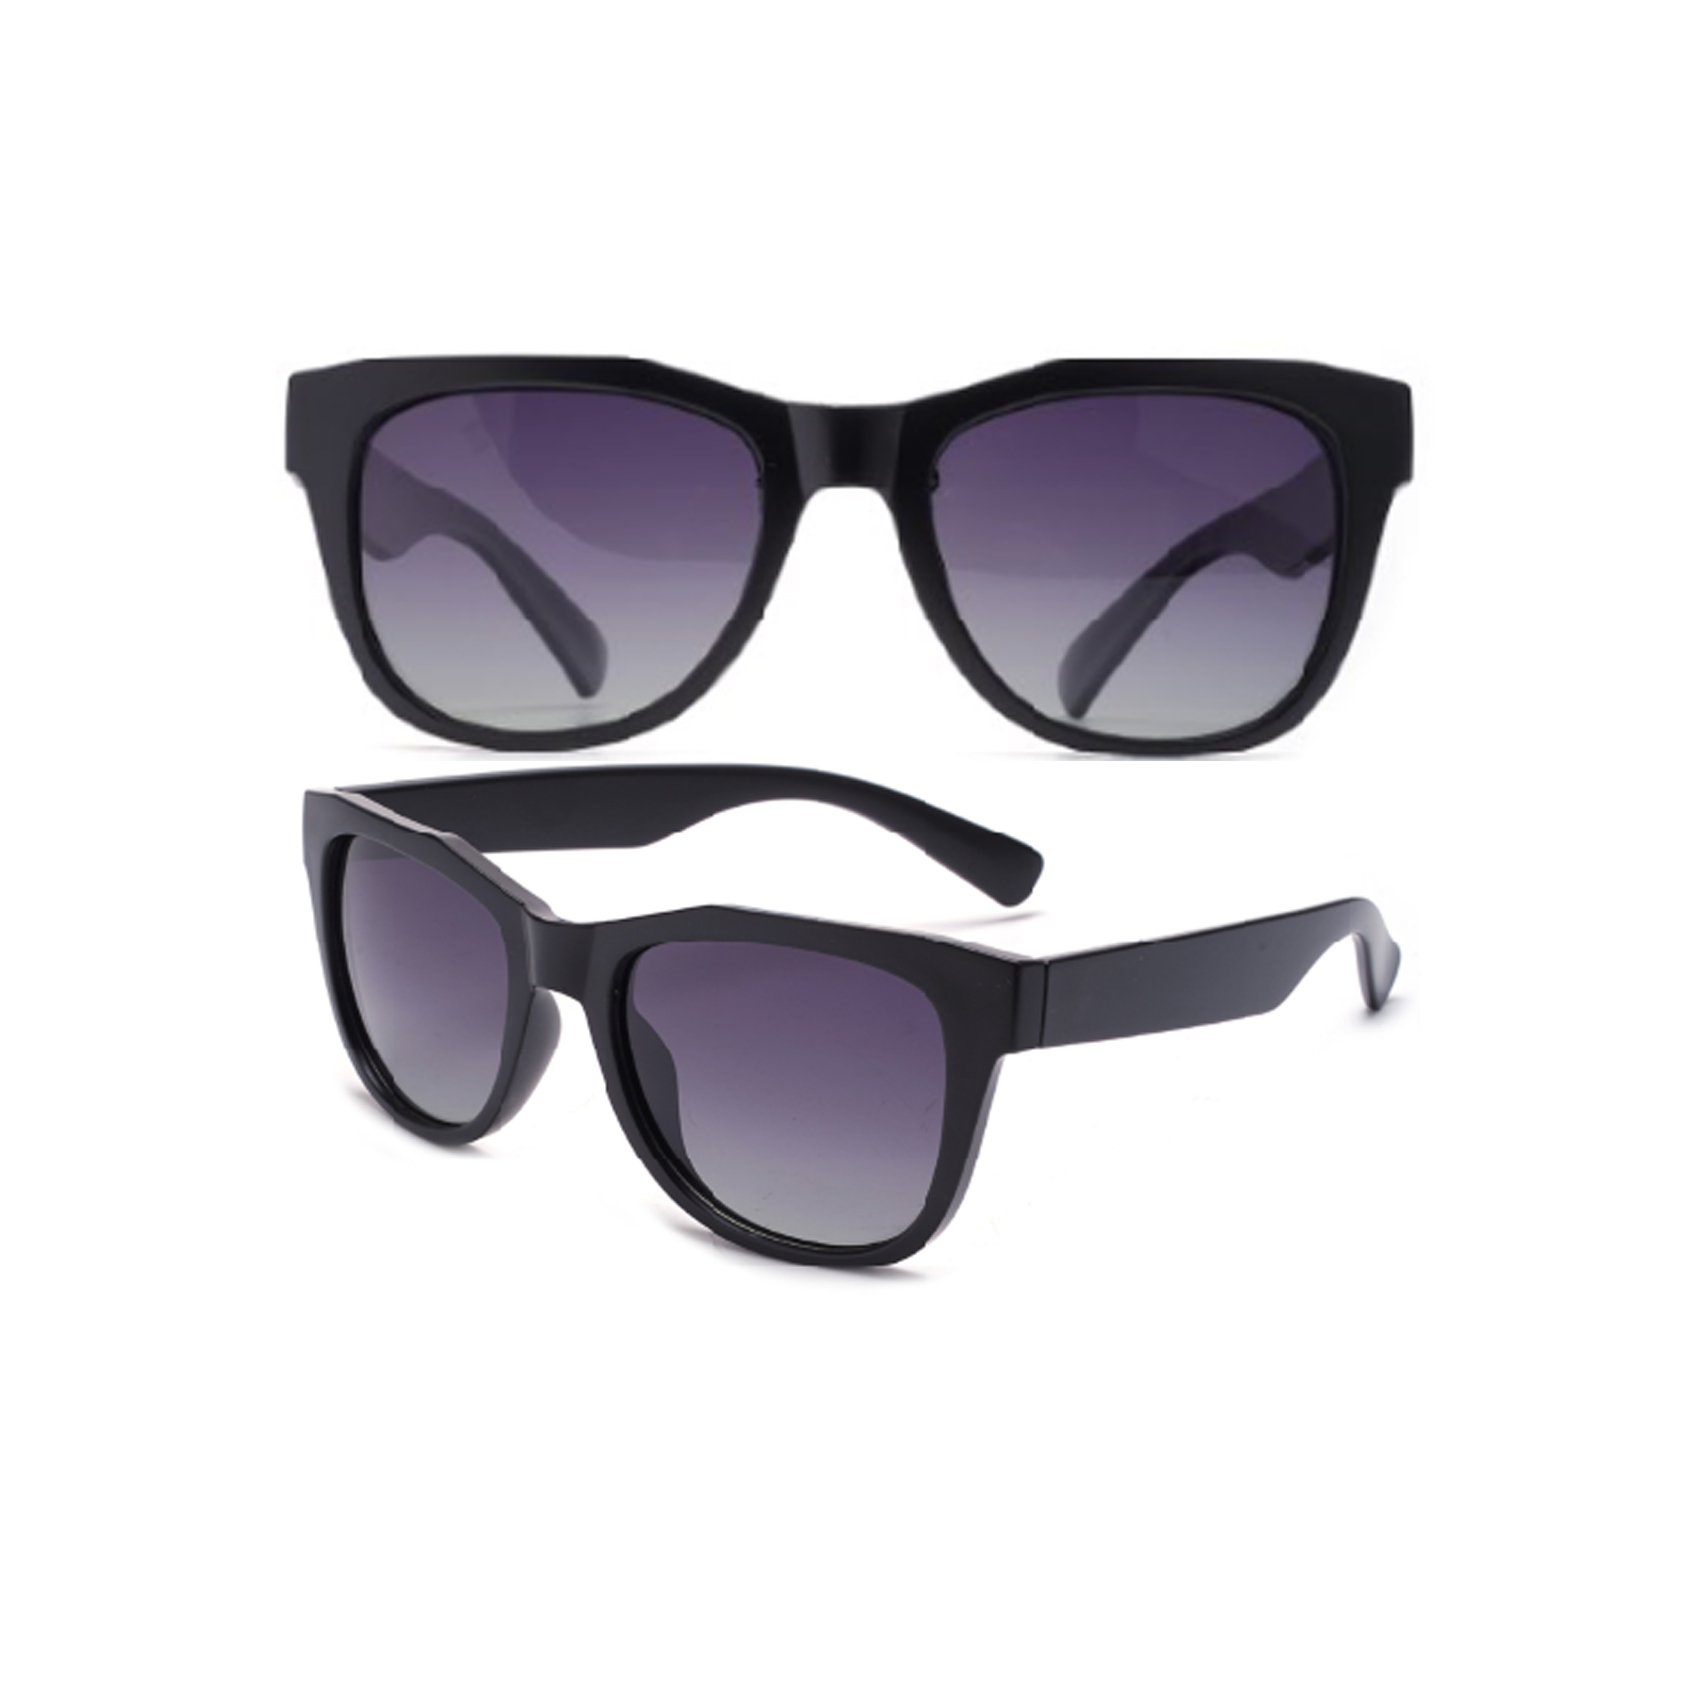 Unisex Retro Round Best Mens Round Sunglasses Wholesale Fashion Sunglasses by the Dozen